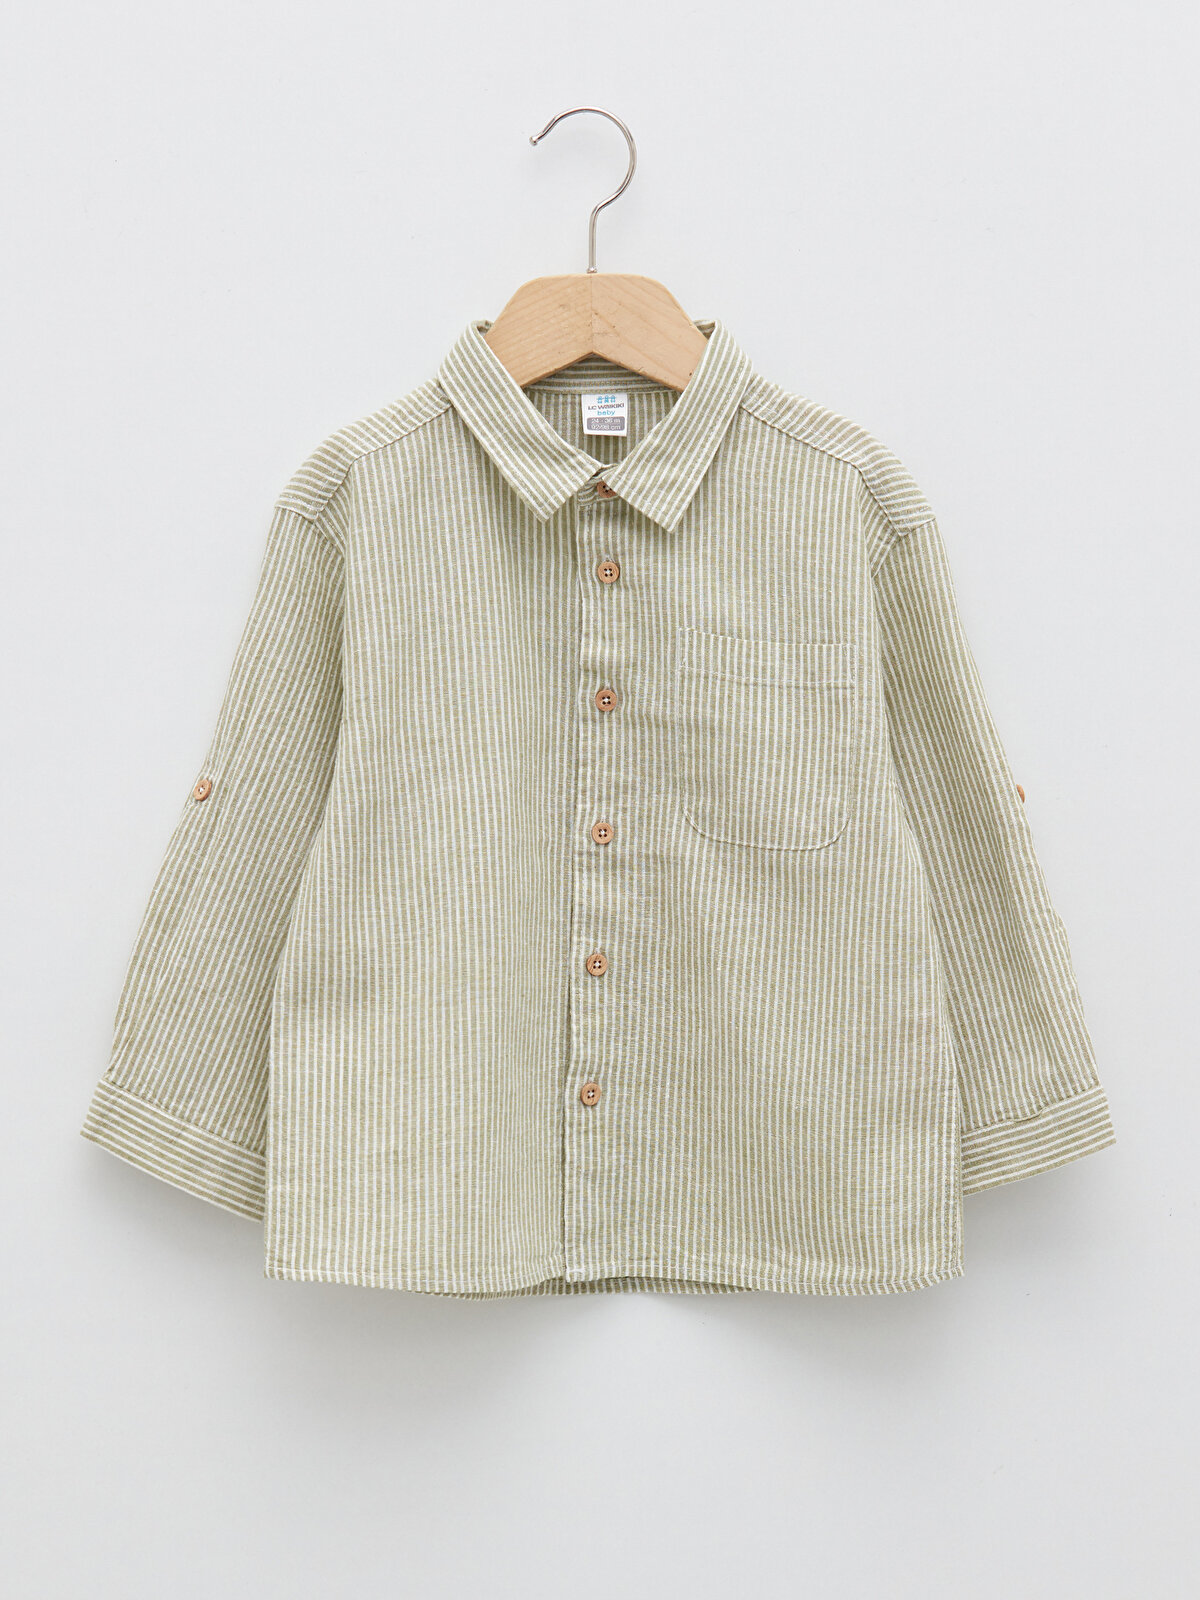 Long Sleeve Striped Baby Boy Shirt -S28471Z1-LGE - S28471Z1-LGE - LC Waikiki